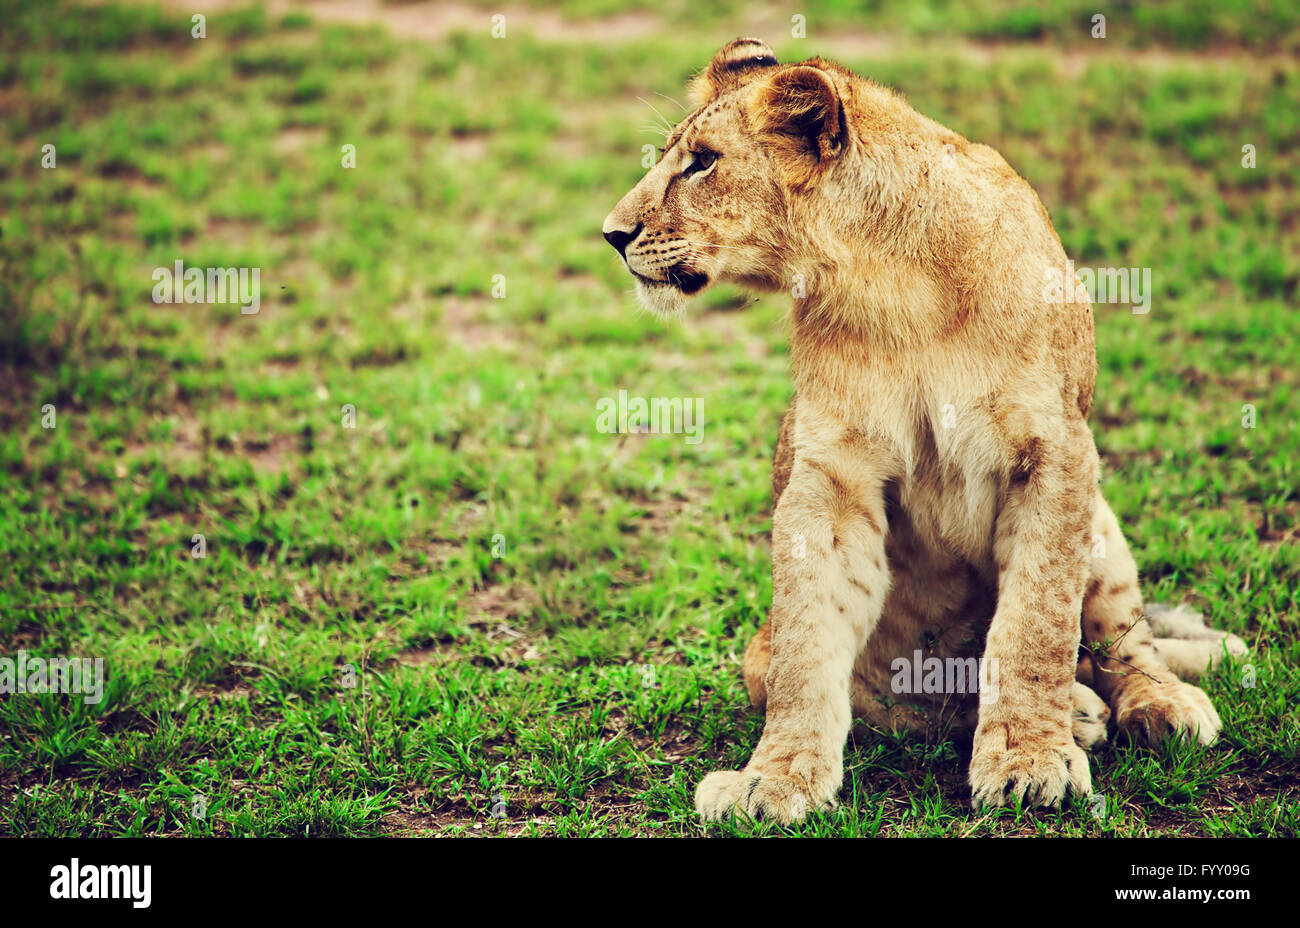 Cachorro de león pequeño retrato. Tanzania, África Foto de stock